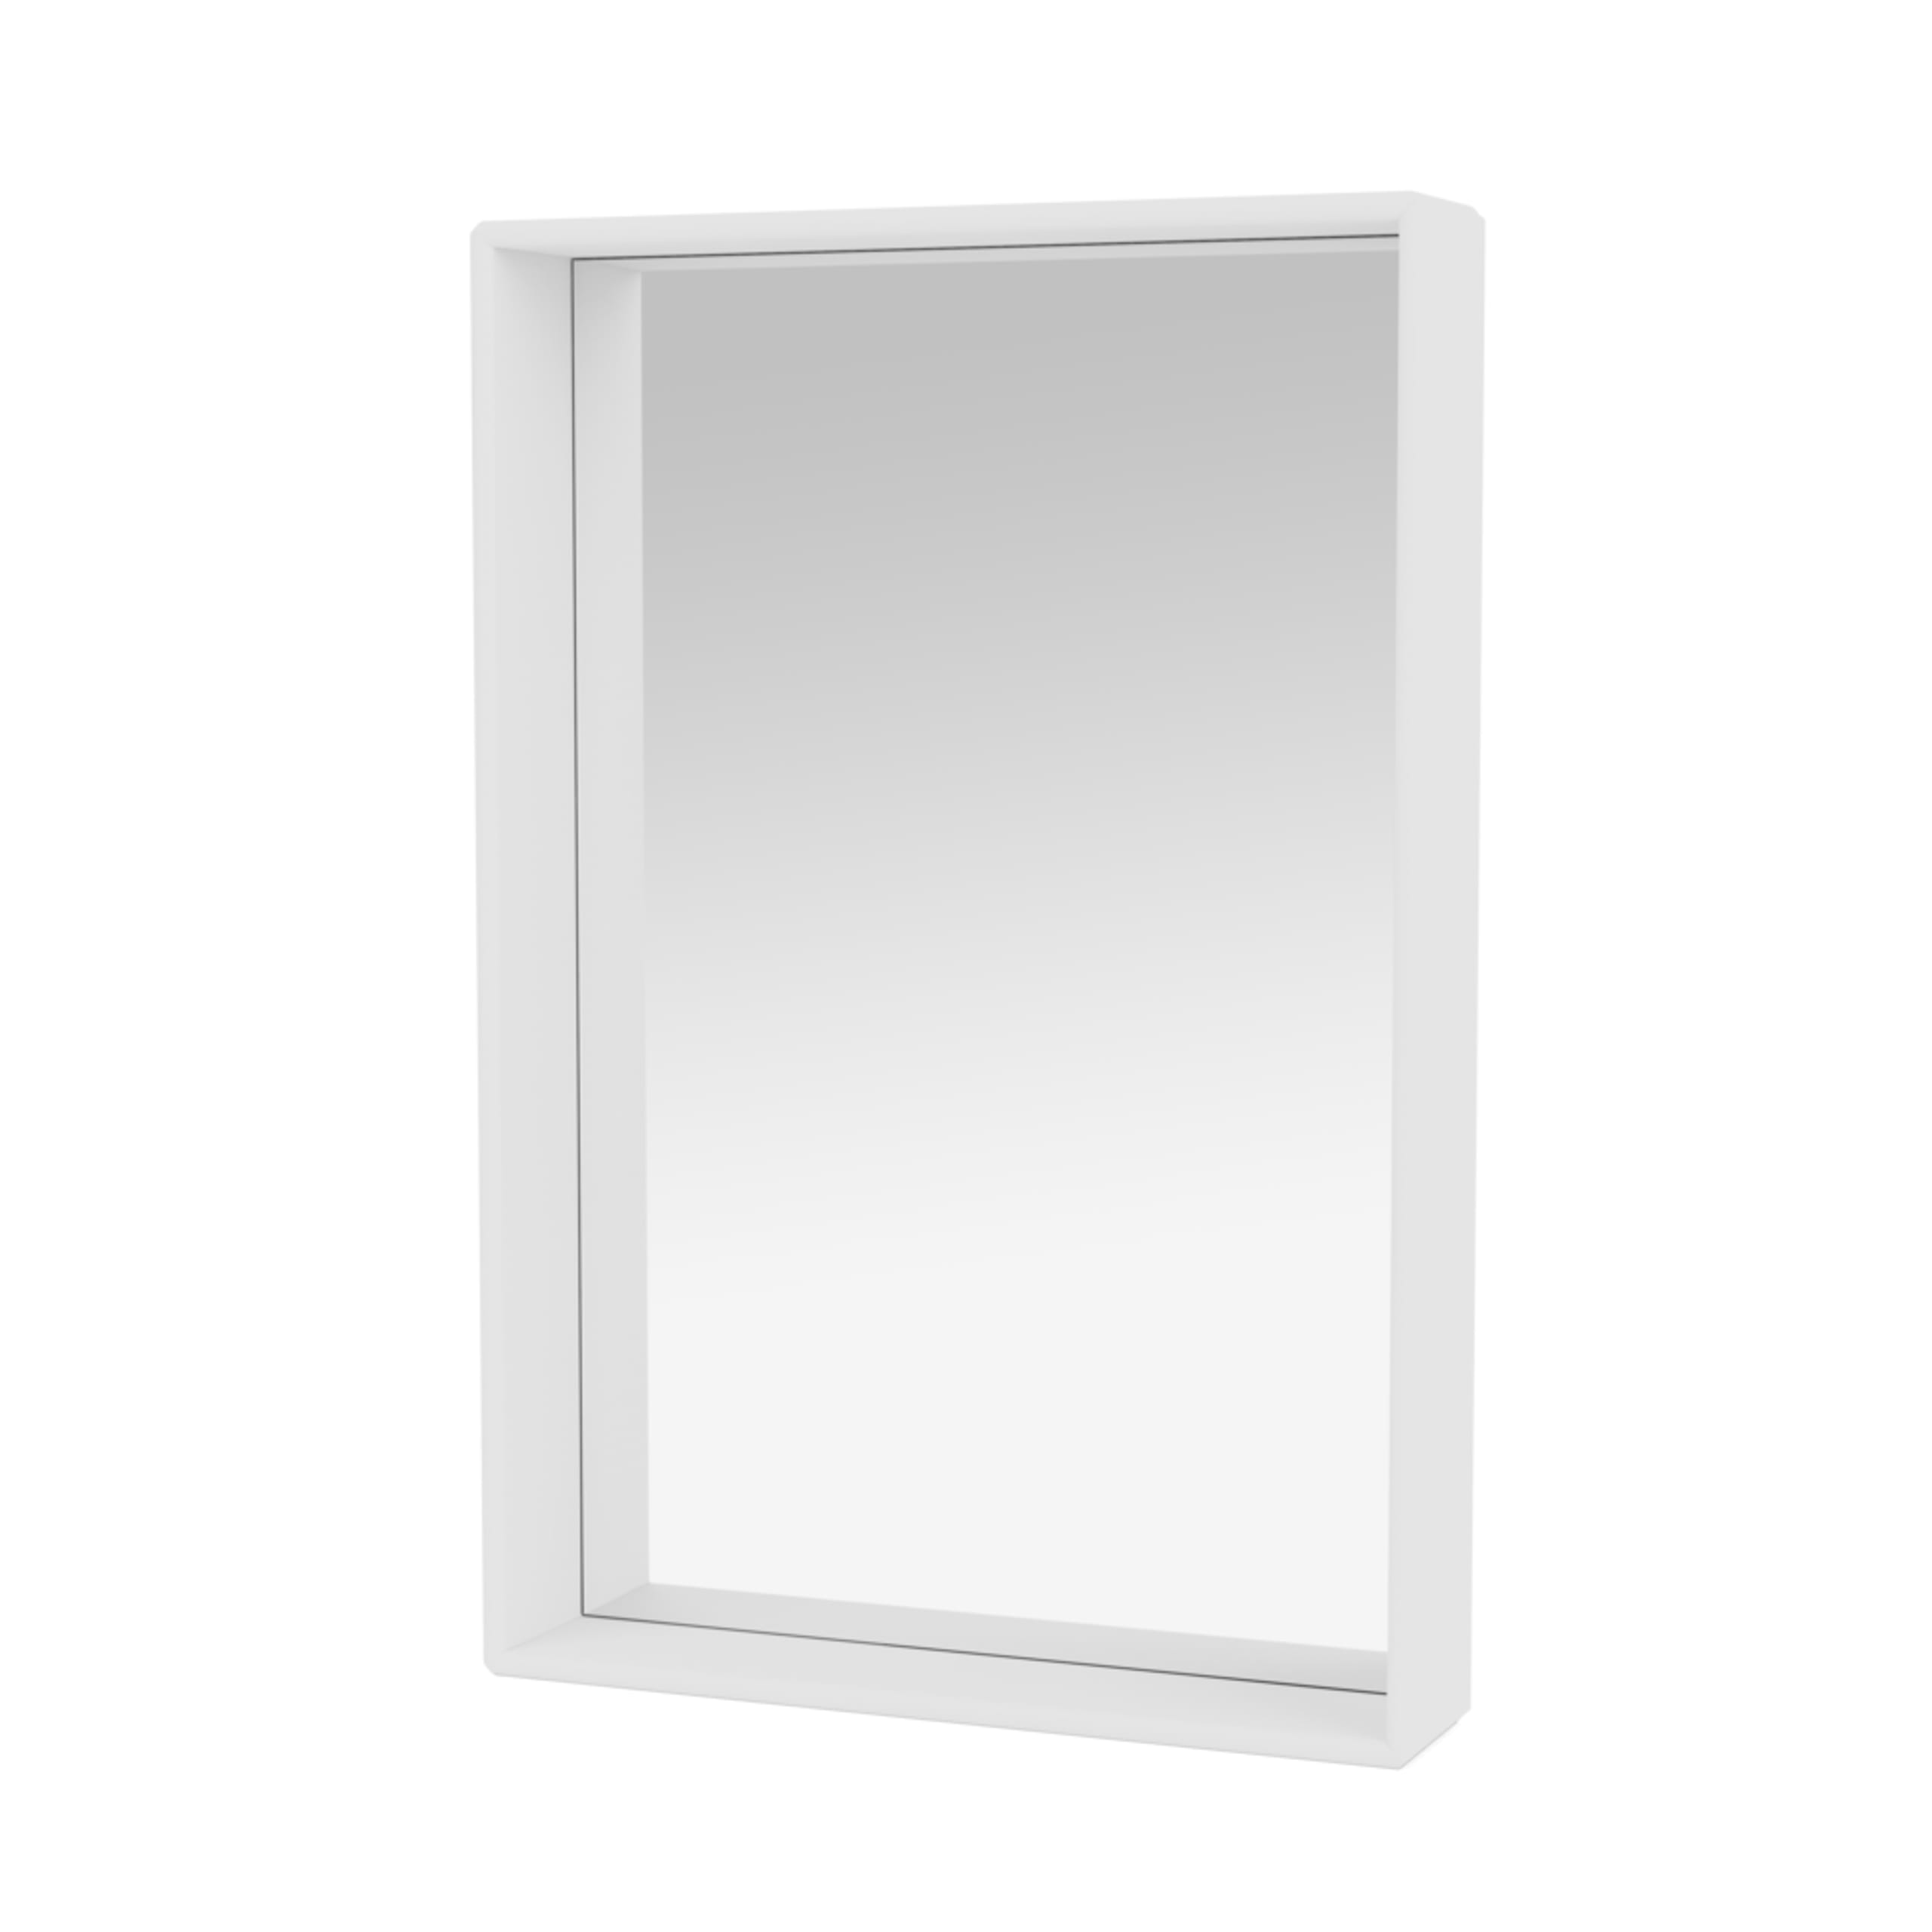 Montana - Colour Frame Mirror - SHELFIE/SPB1208K - Mirror - New White